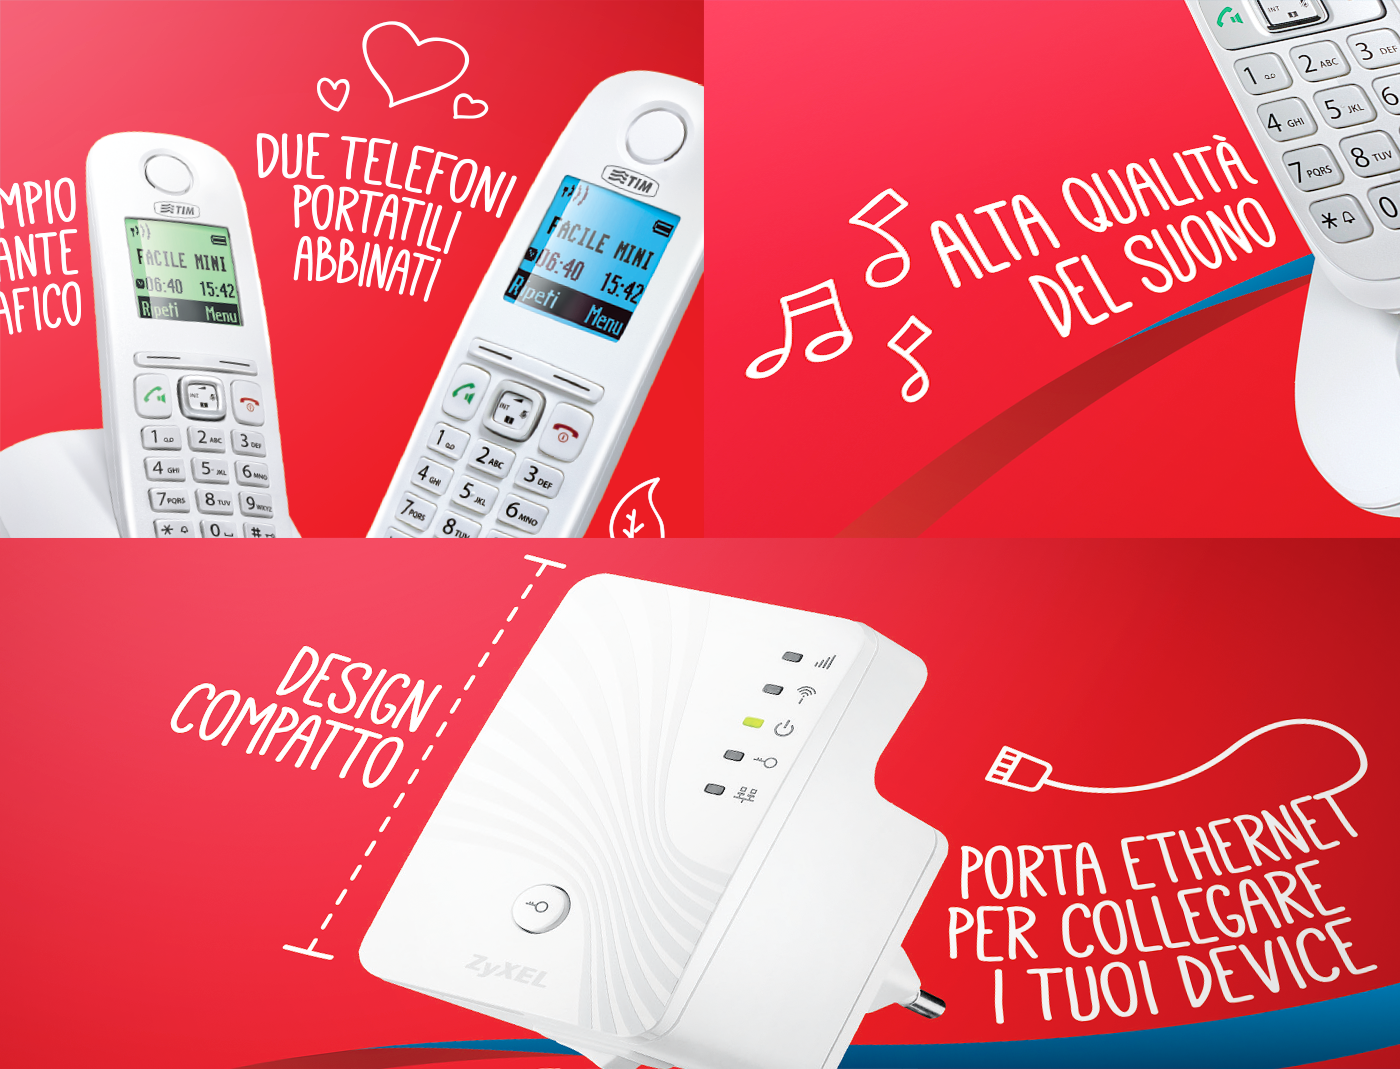 #pack design draw doodle Script box TIM telecom italia mobile Telephony Modem telephone boxes case sketch